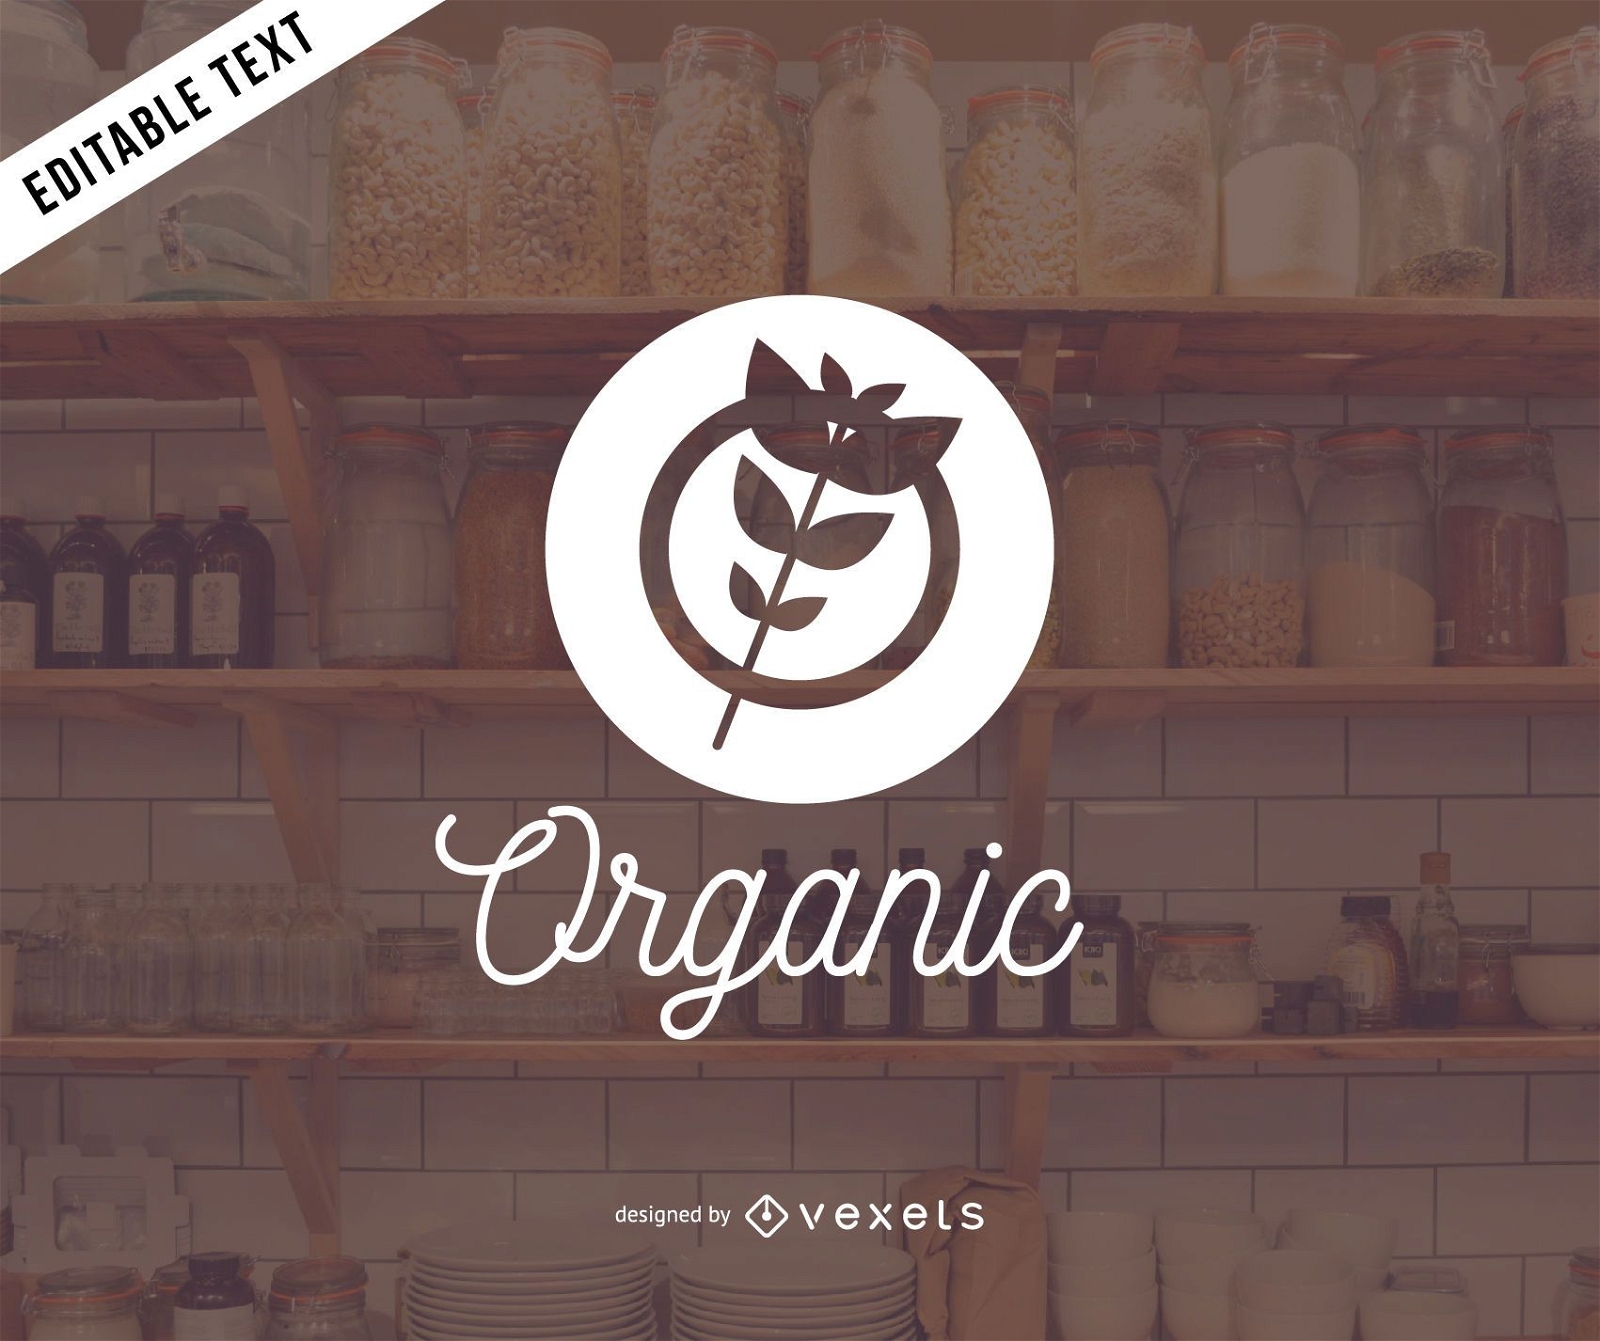 Organic products logo design